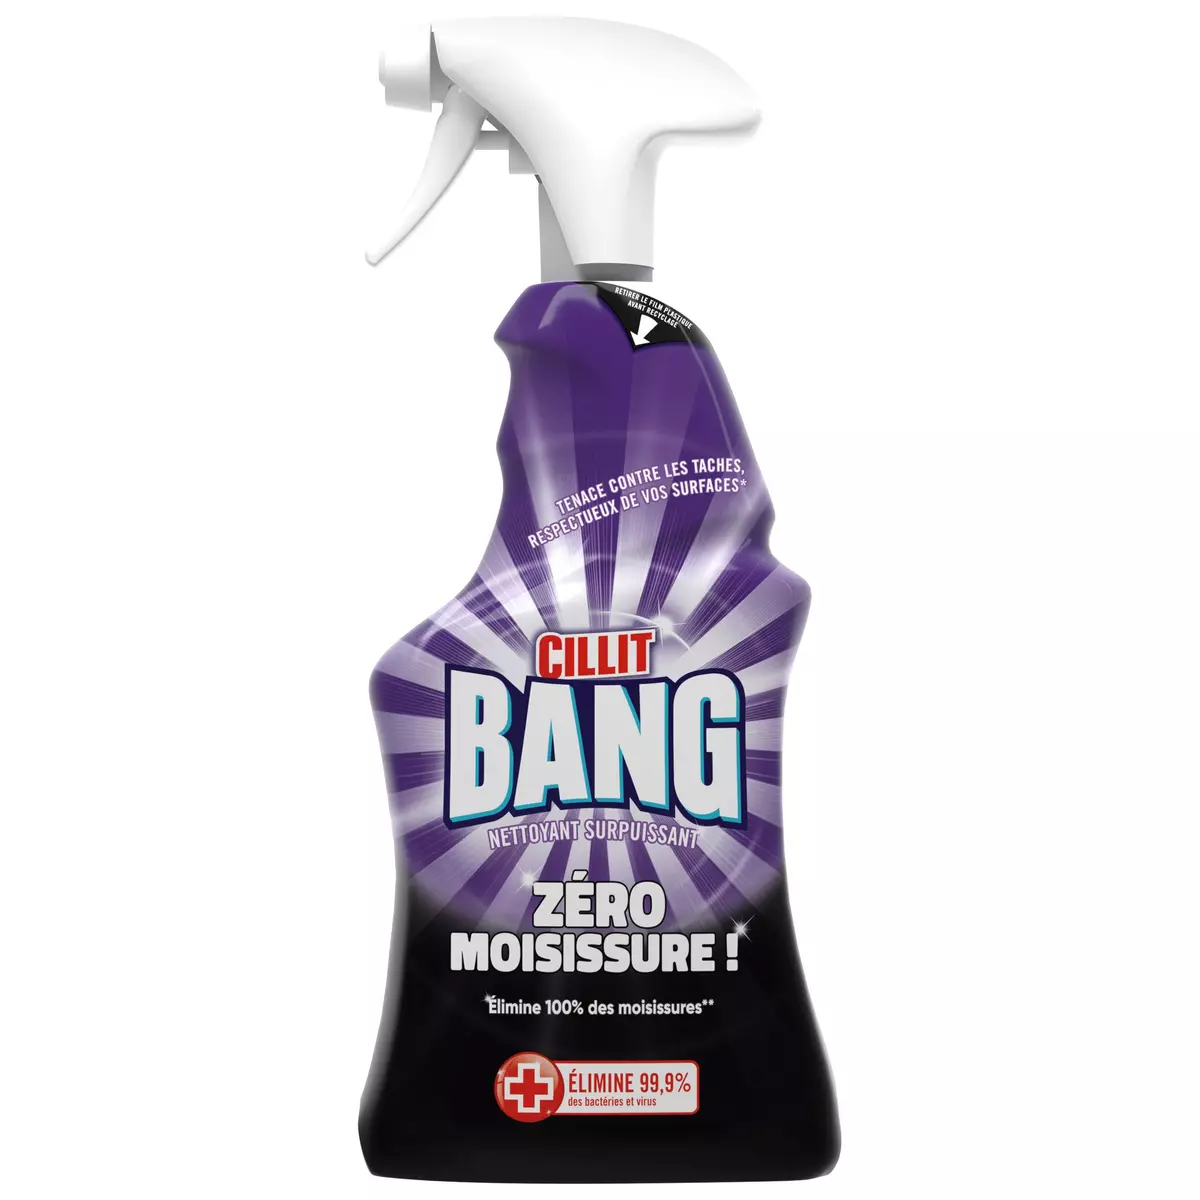 CILLIT BANG Spray nettoyant surpuissant anti moisissures 750ml pas cher 